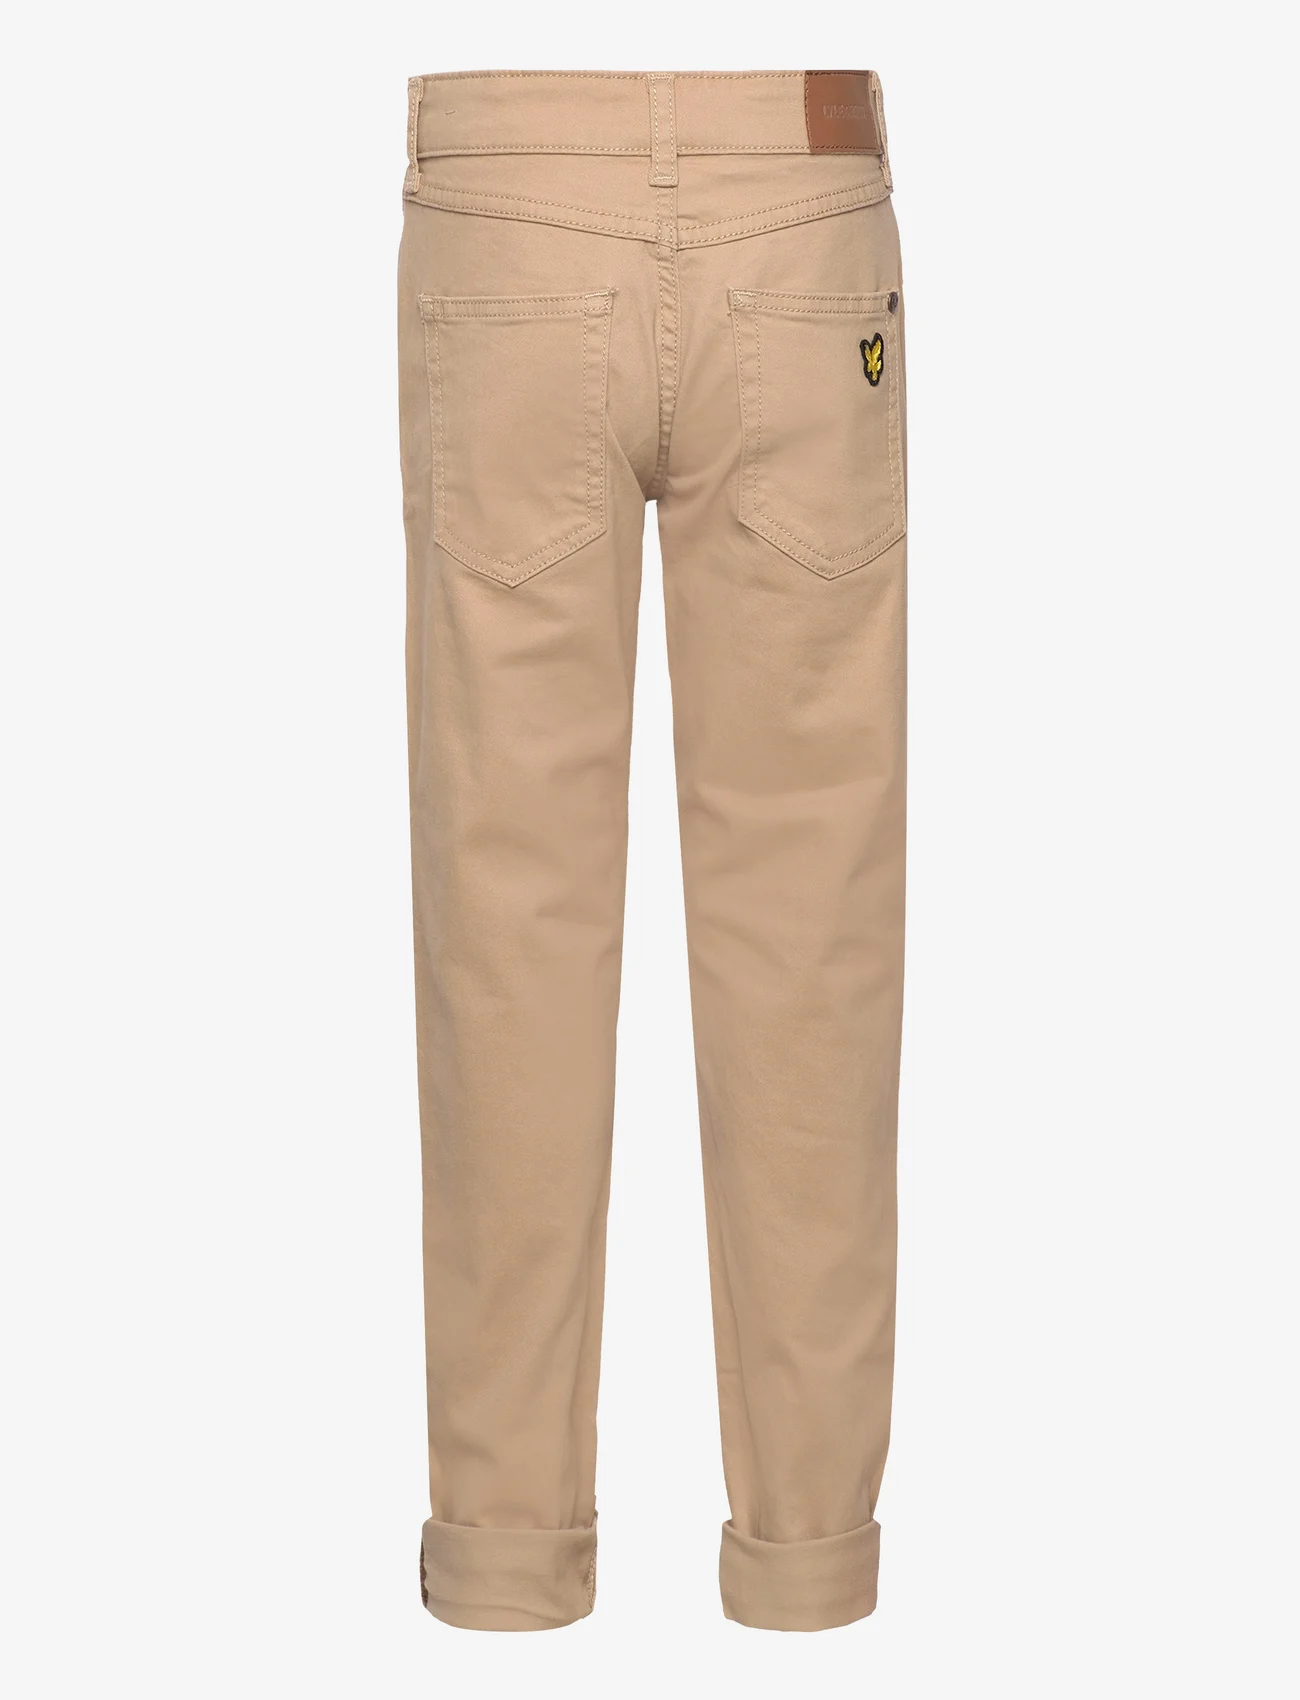 Lyle & Scott Junior - 5 Pocket Trouser - kelnės - nomad - 1